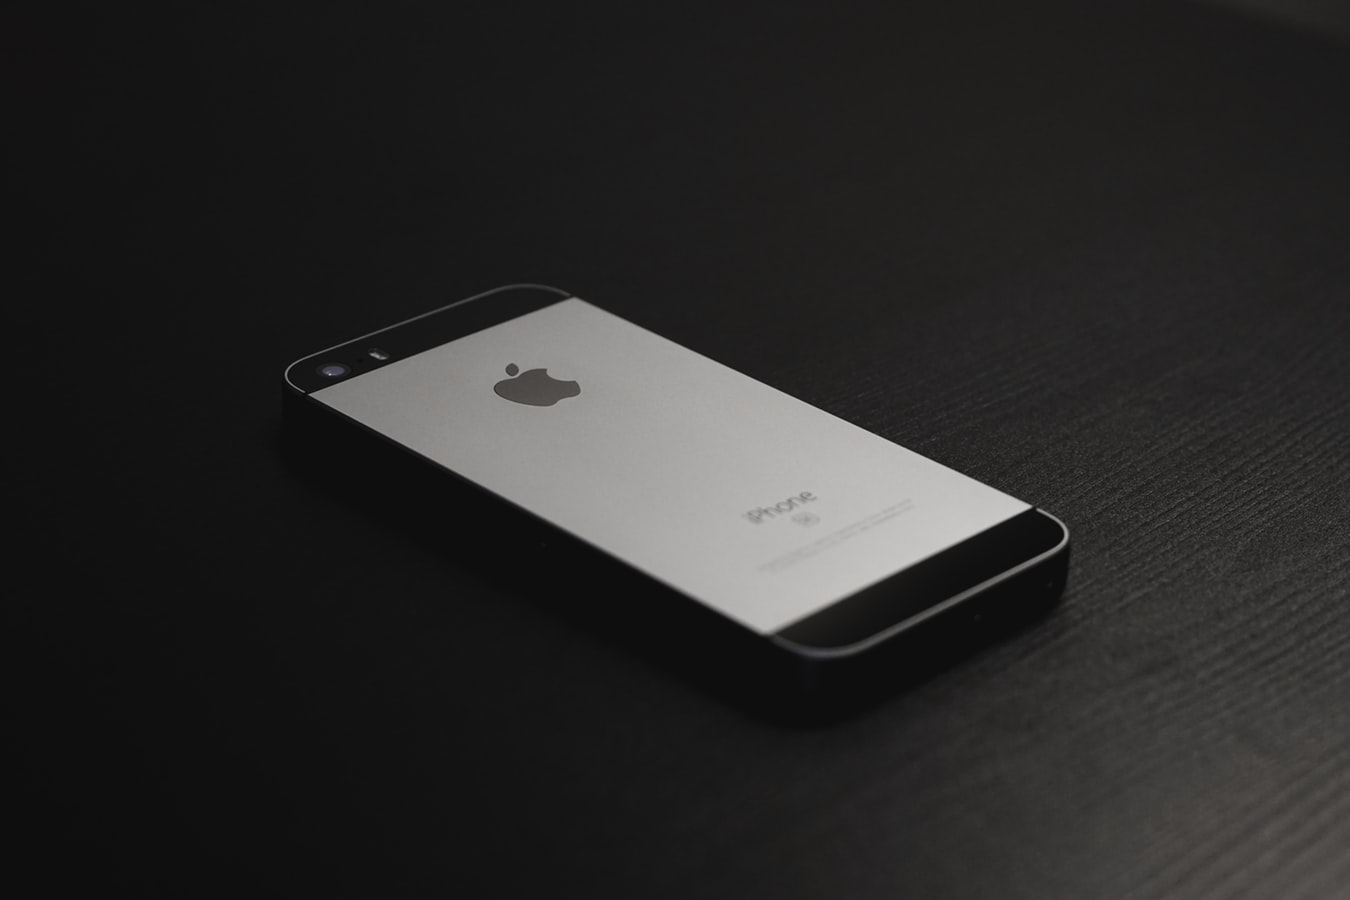 iPhone 26 يوليو 2021 0comments تلقى المصور جائزة التصوير الفوتوغرافي في عام 2021 مع هاتف iPhone 5s اعتبارًا من عام 2013